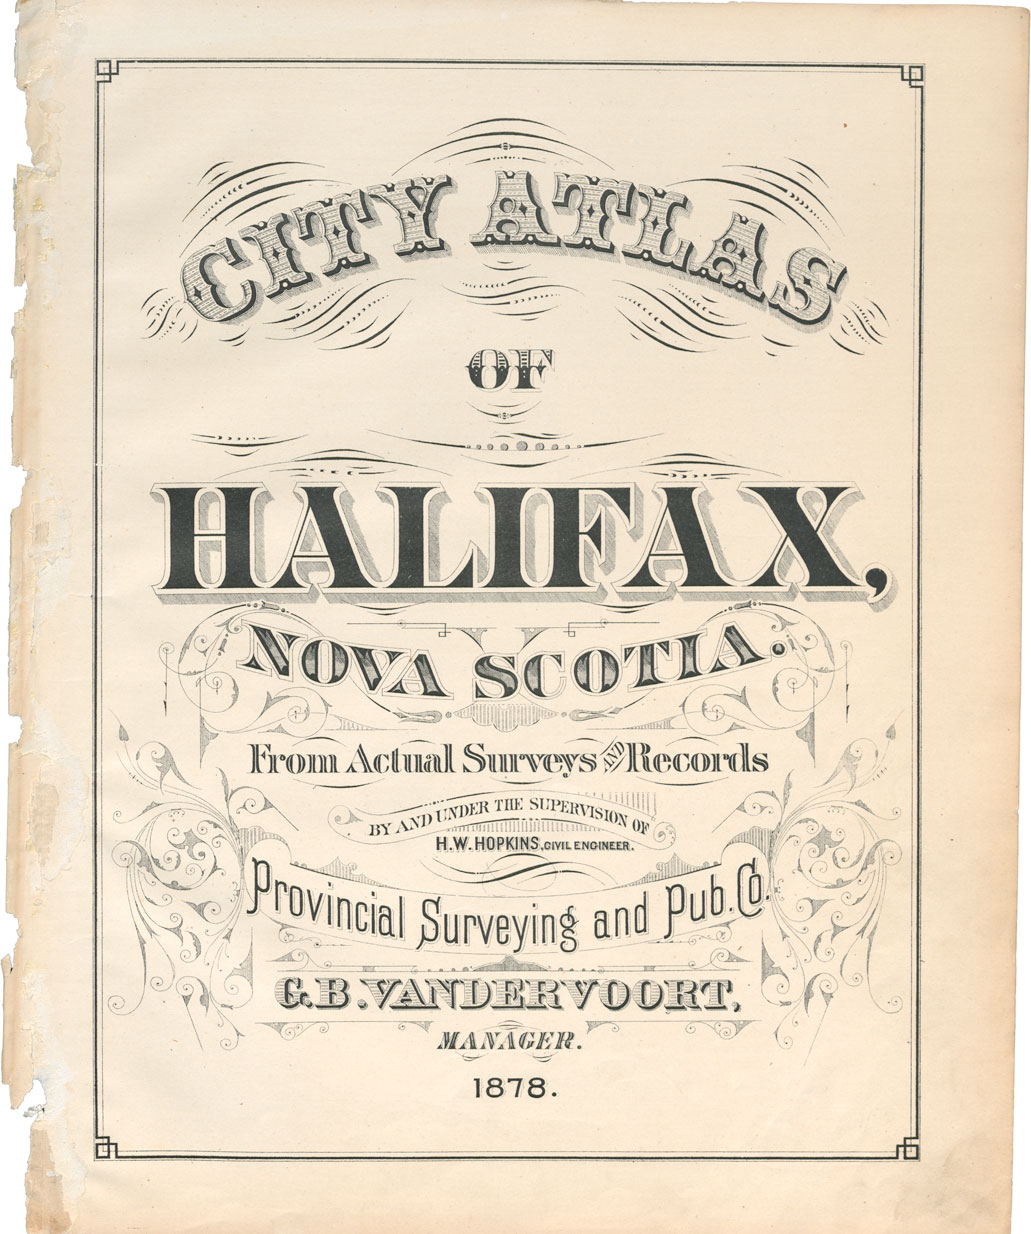 Title Page: City Atlas of Halifax, Nova Scotia